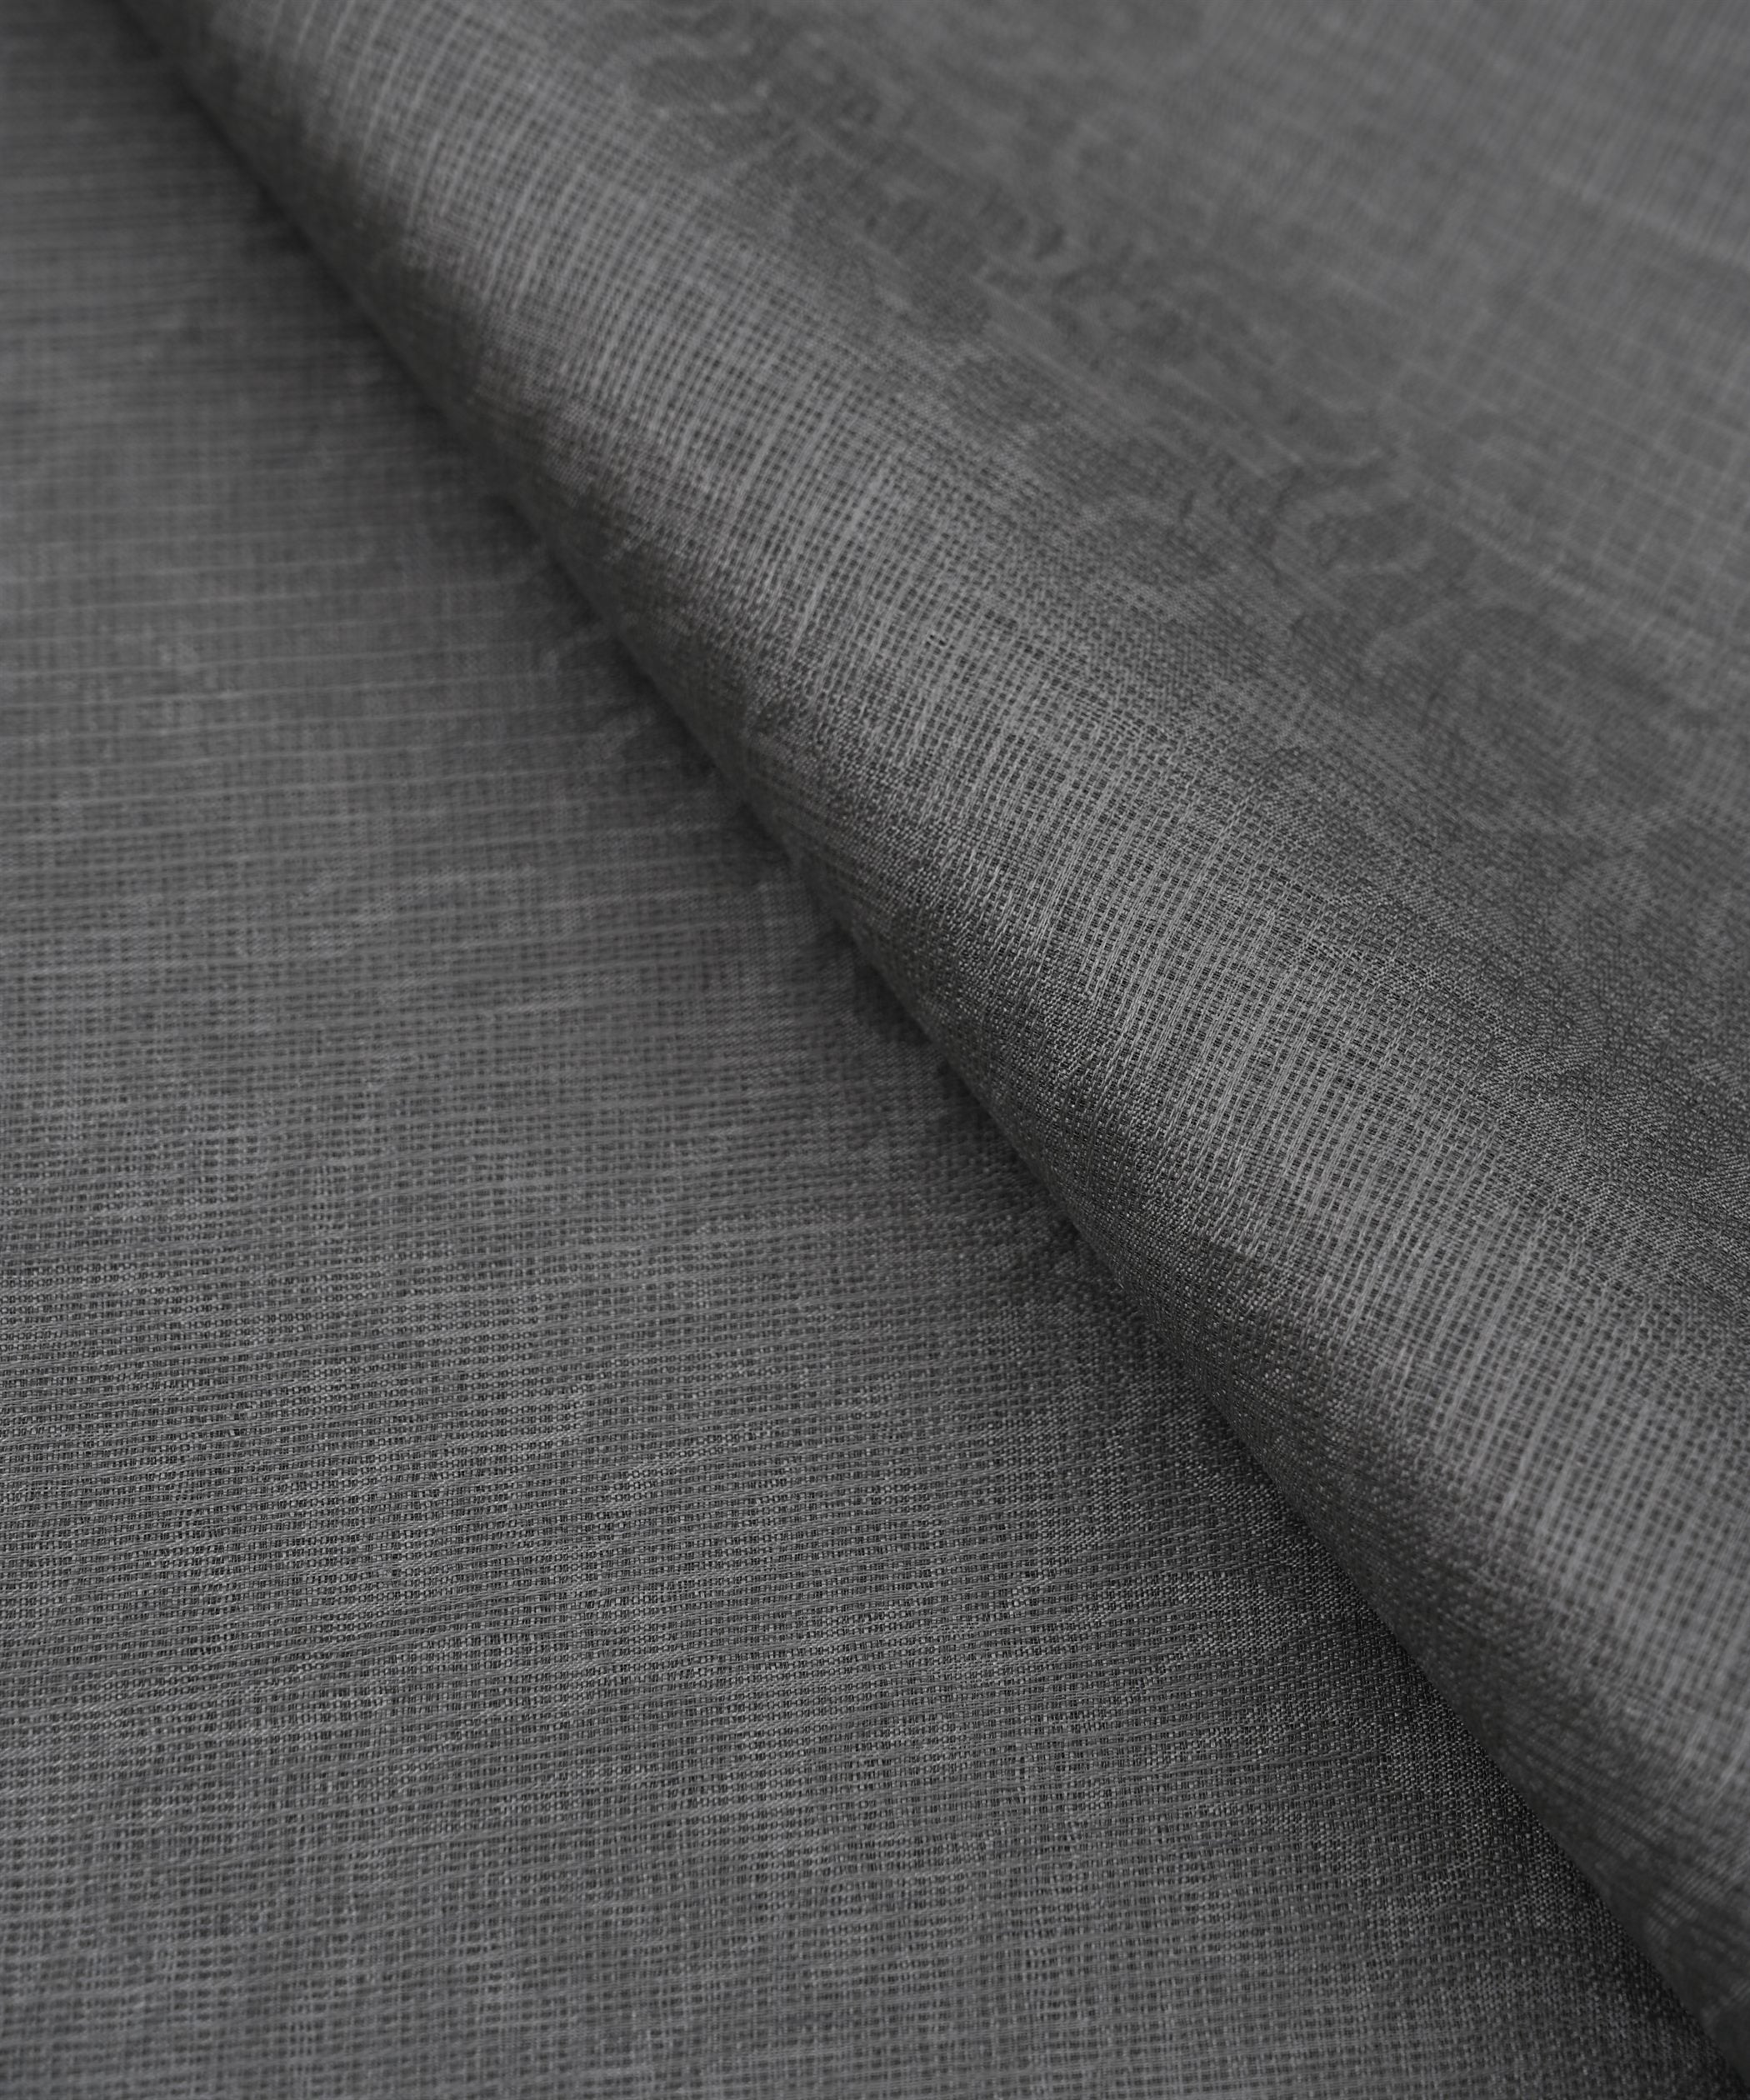 Grey Floral Kota Brasso Fabric